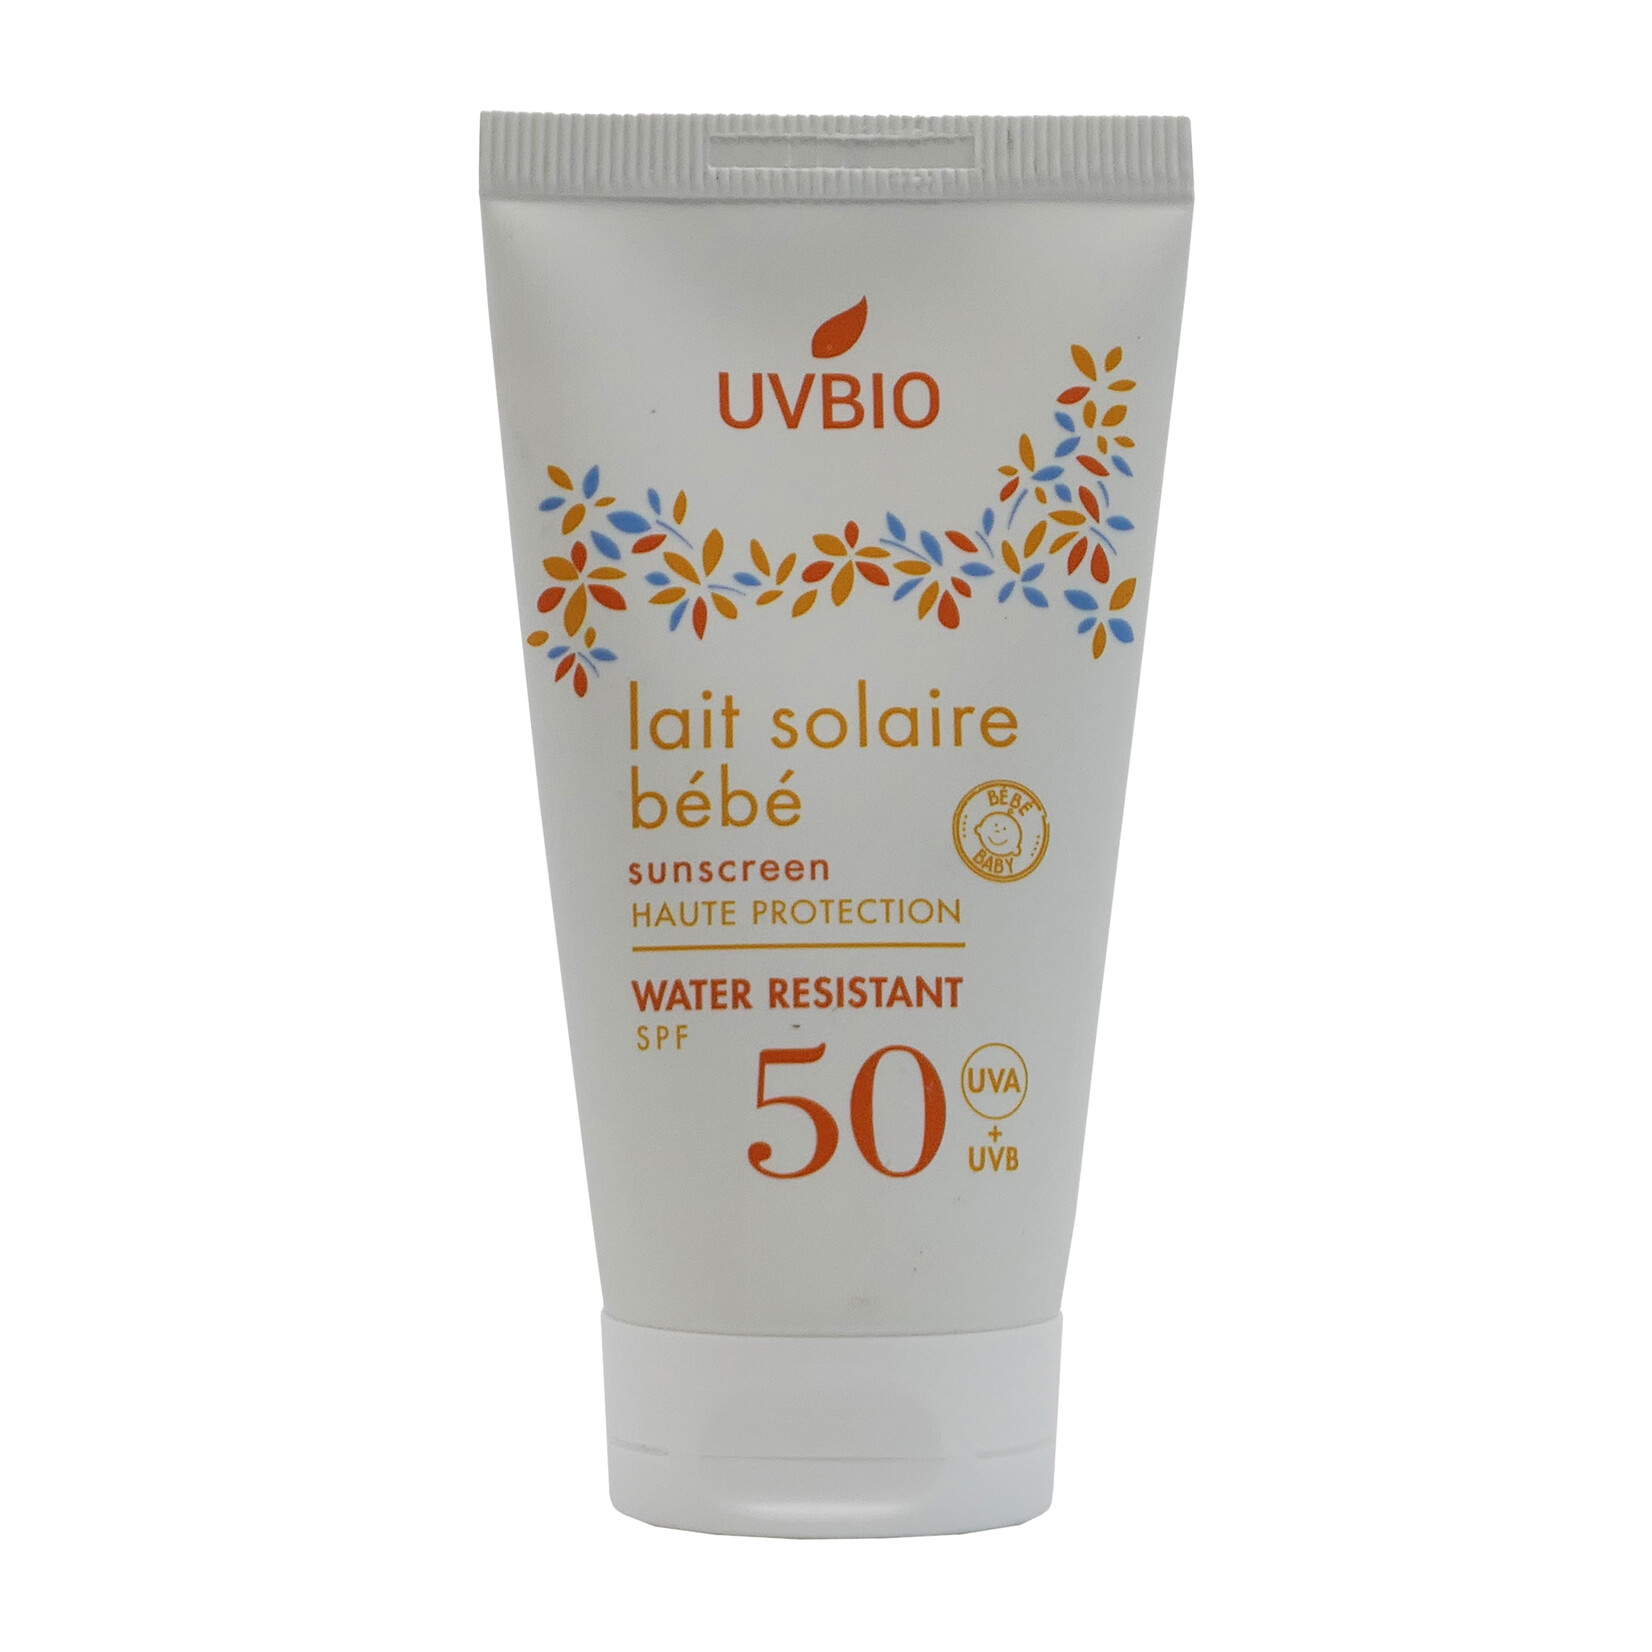 Uv-Bio  UVBIO Sunscreen BABY SPF 50 Bio (Water resistant) - 50ml